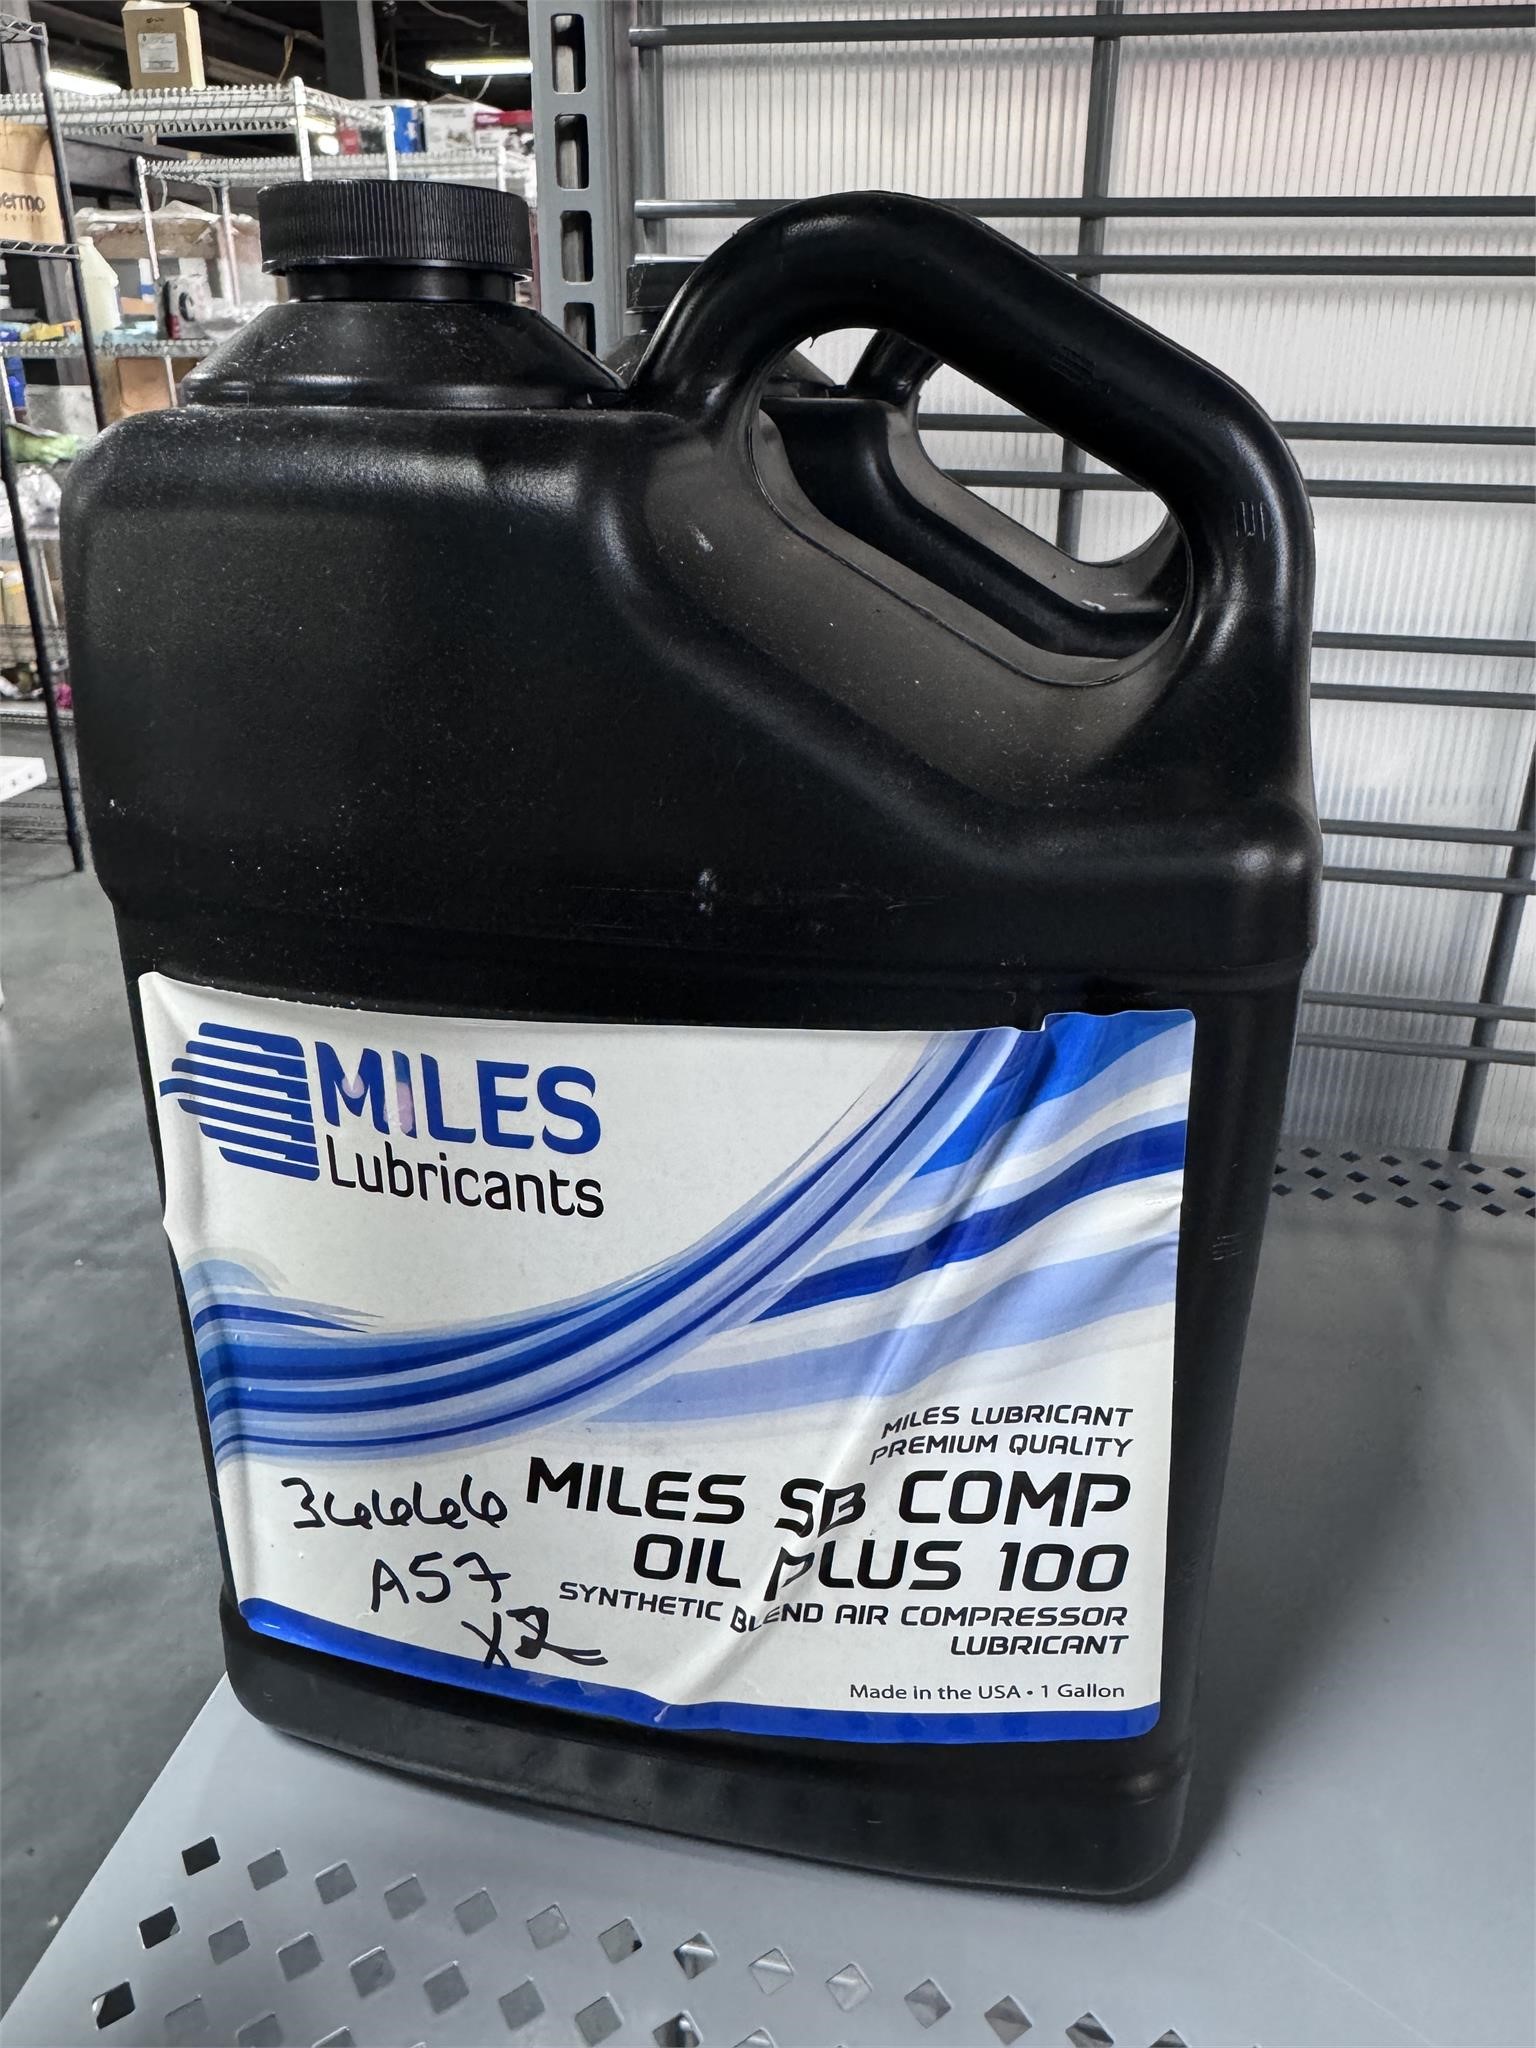 2X Miles SB Comp Oil Plus 100 Lubricant A57